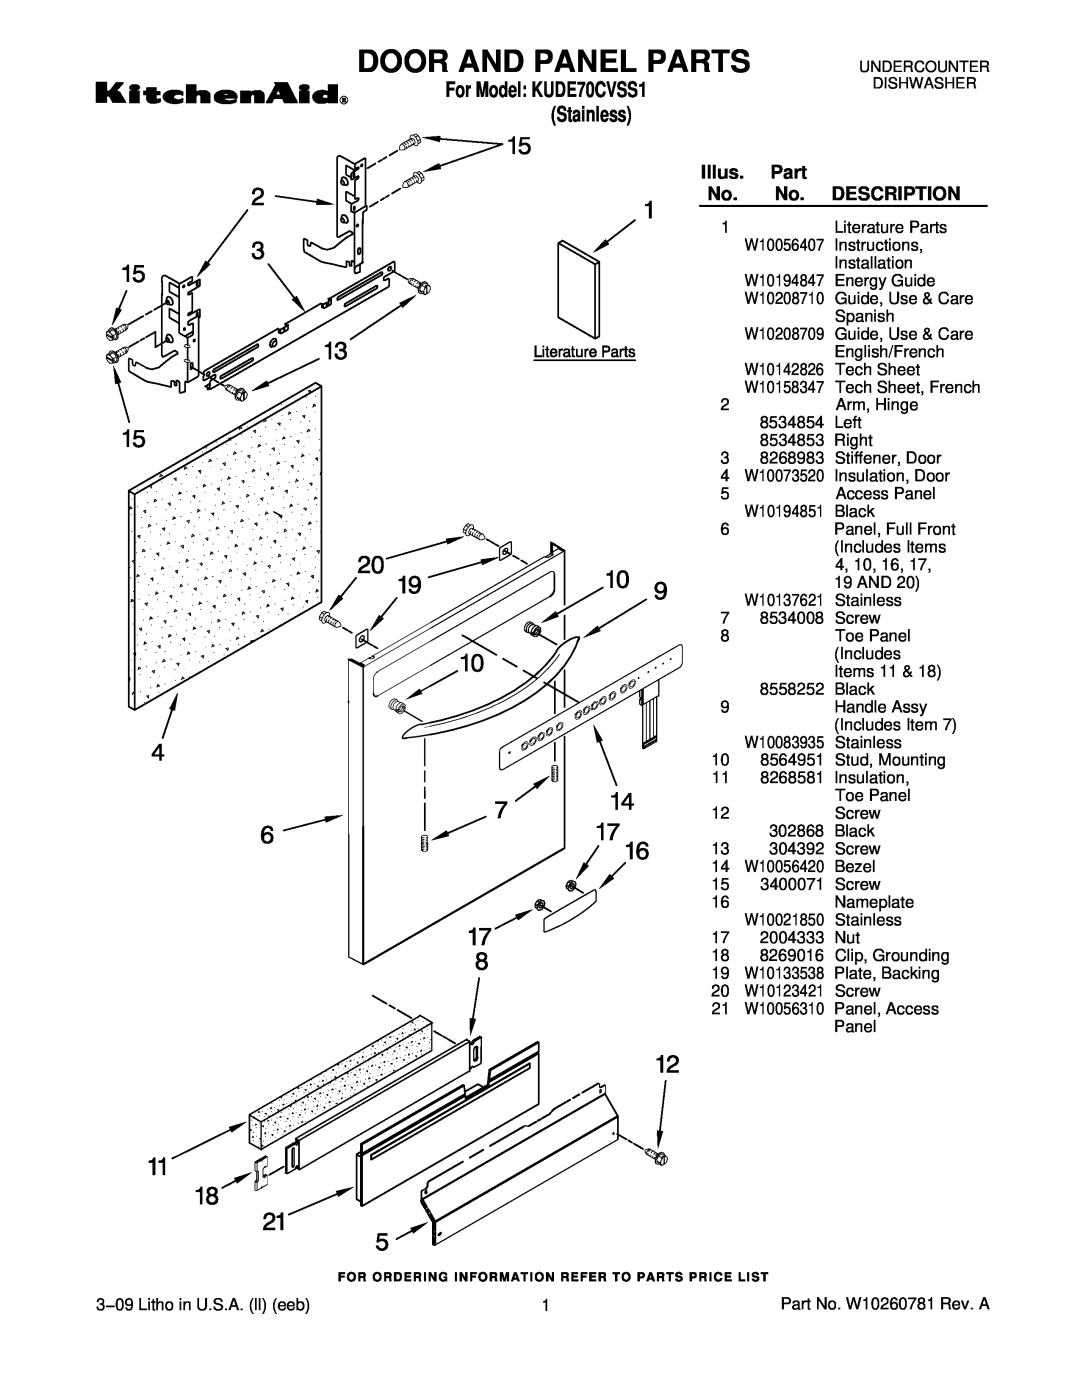 KitchenAid manual Illus, Description, Door And Panel Parts, For Model KUDE70CVSS1, Stainless 